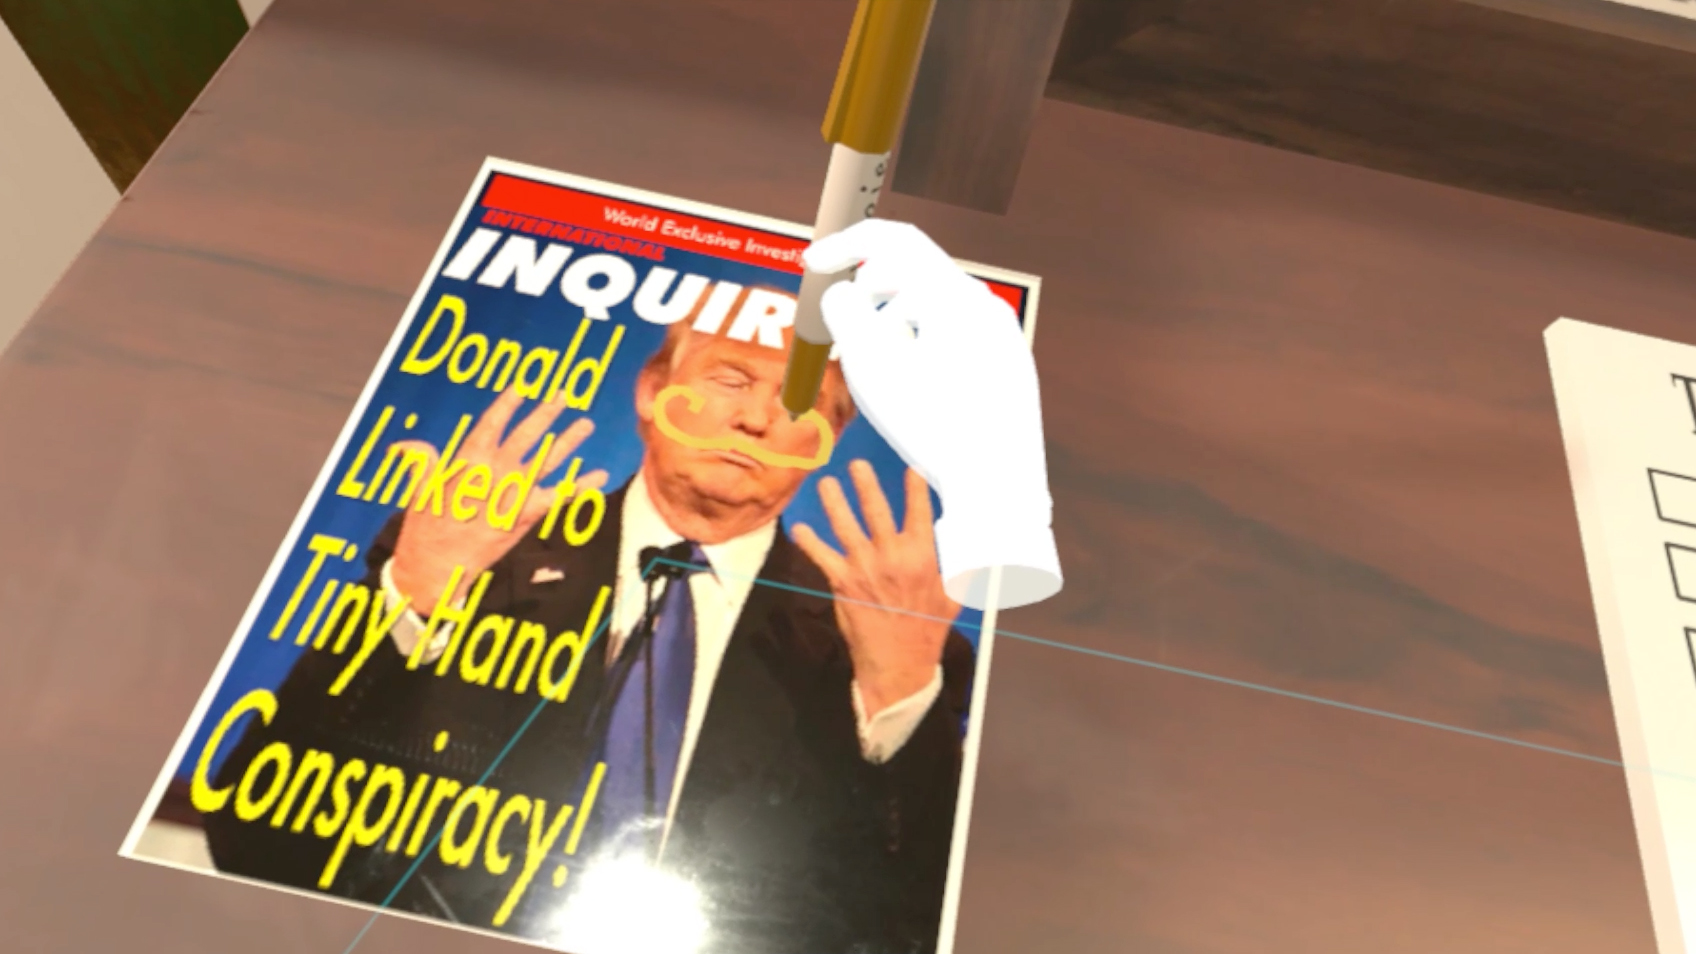 Trump Simulator VR Steam Gift